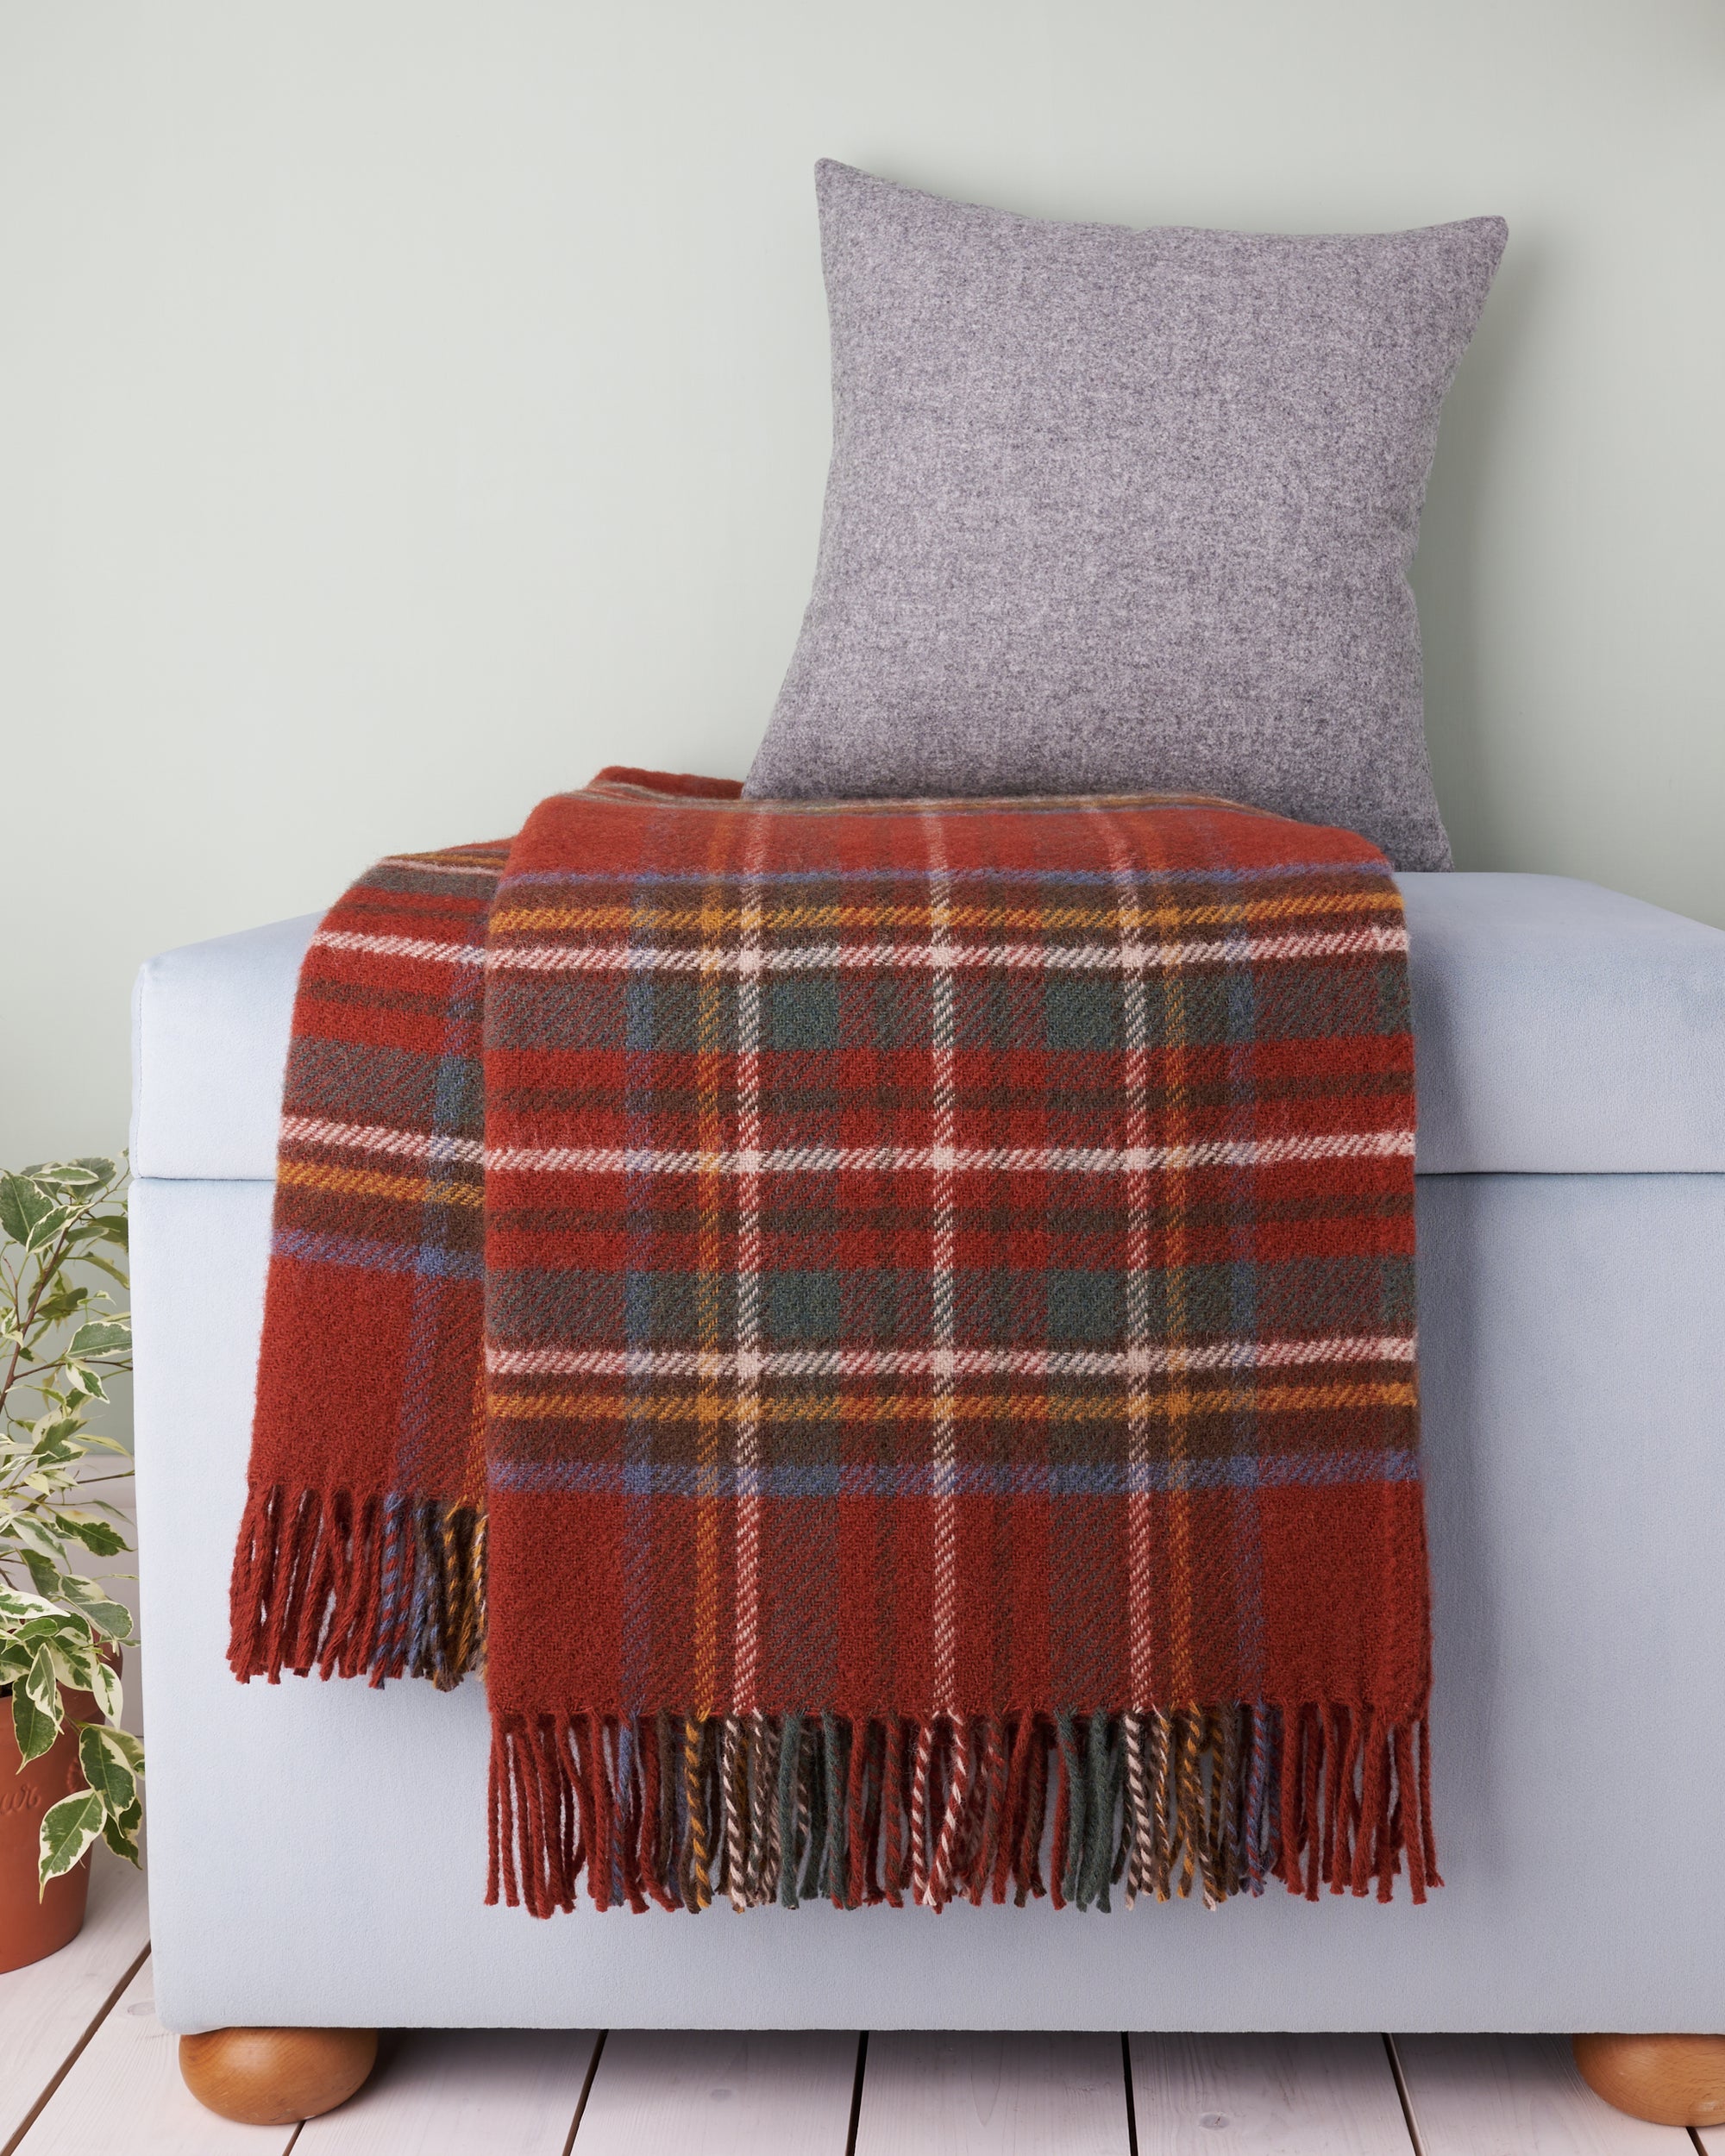 Tweedmill Antique Royal Stewart Tartan Wool Blanket Throw